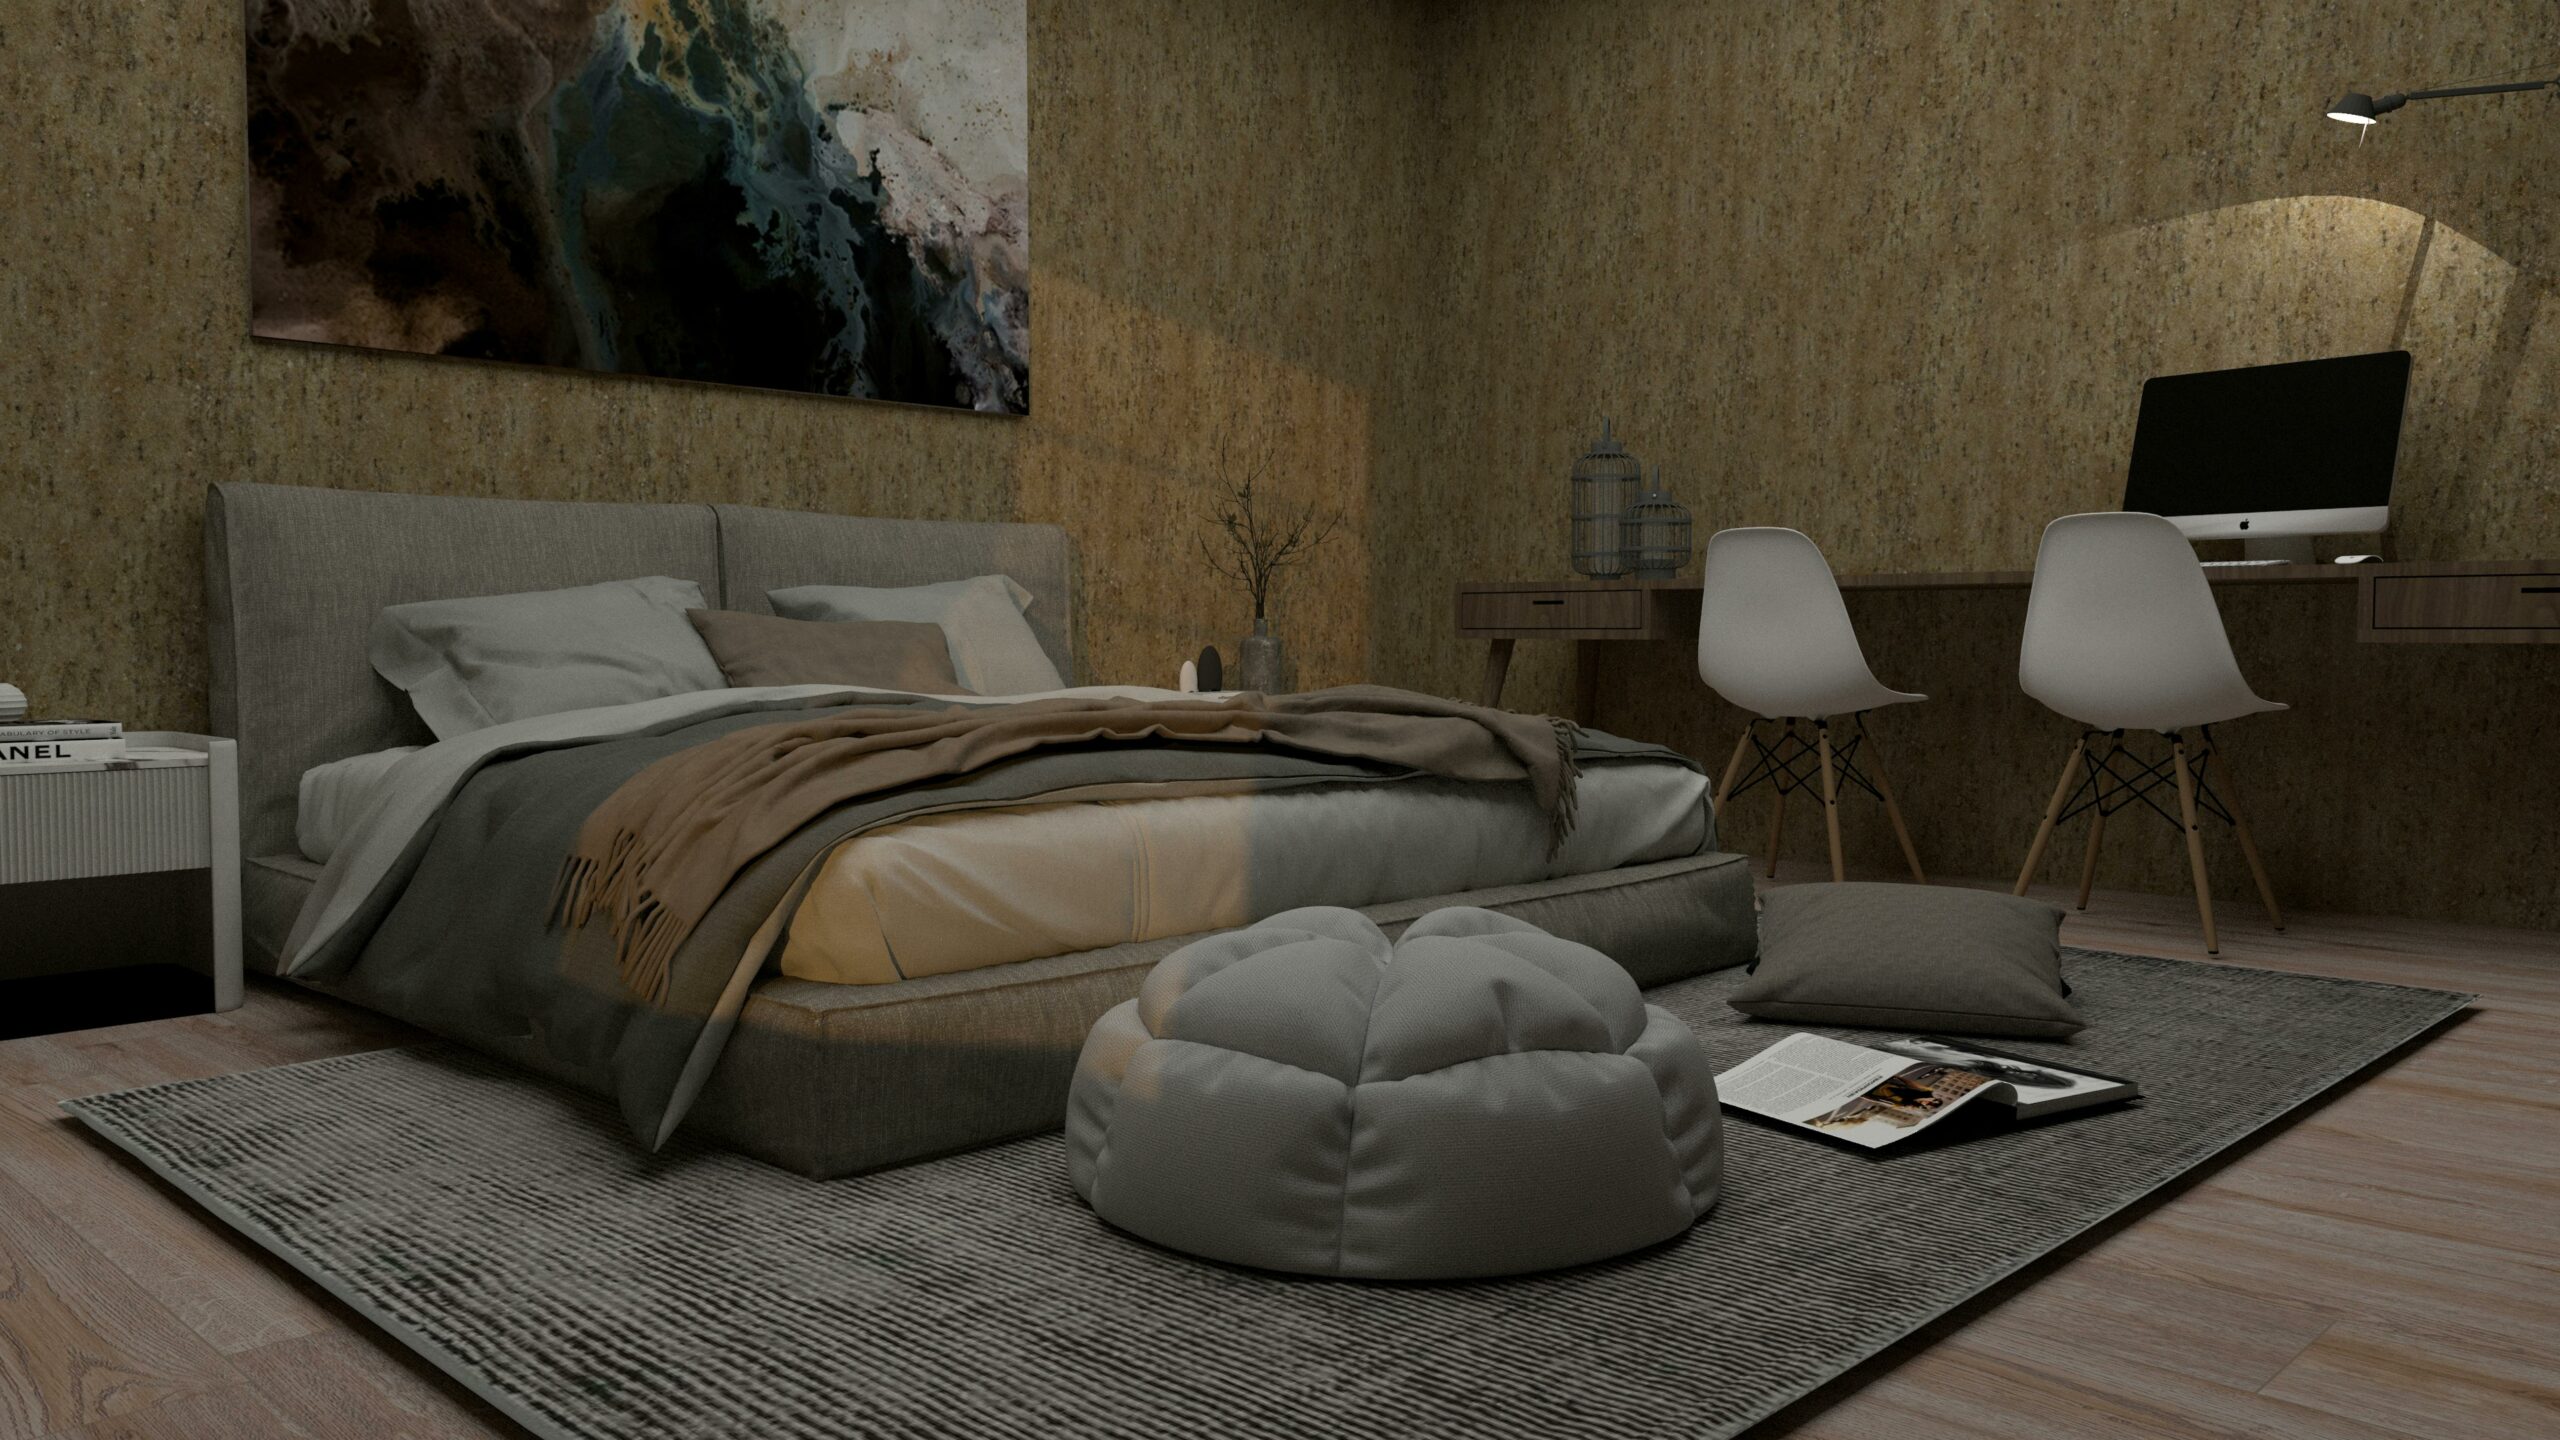 Bedroom with Wallpaper